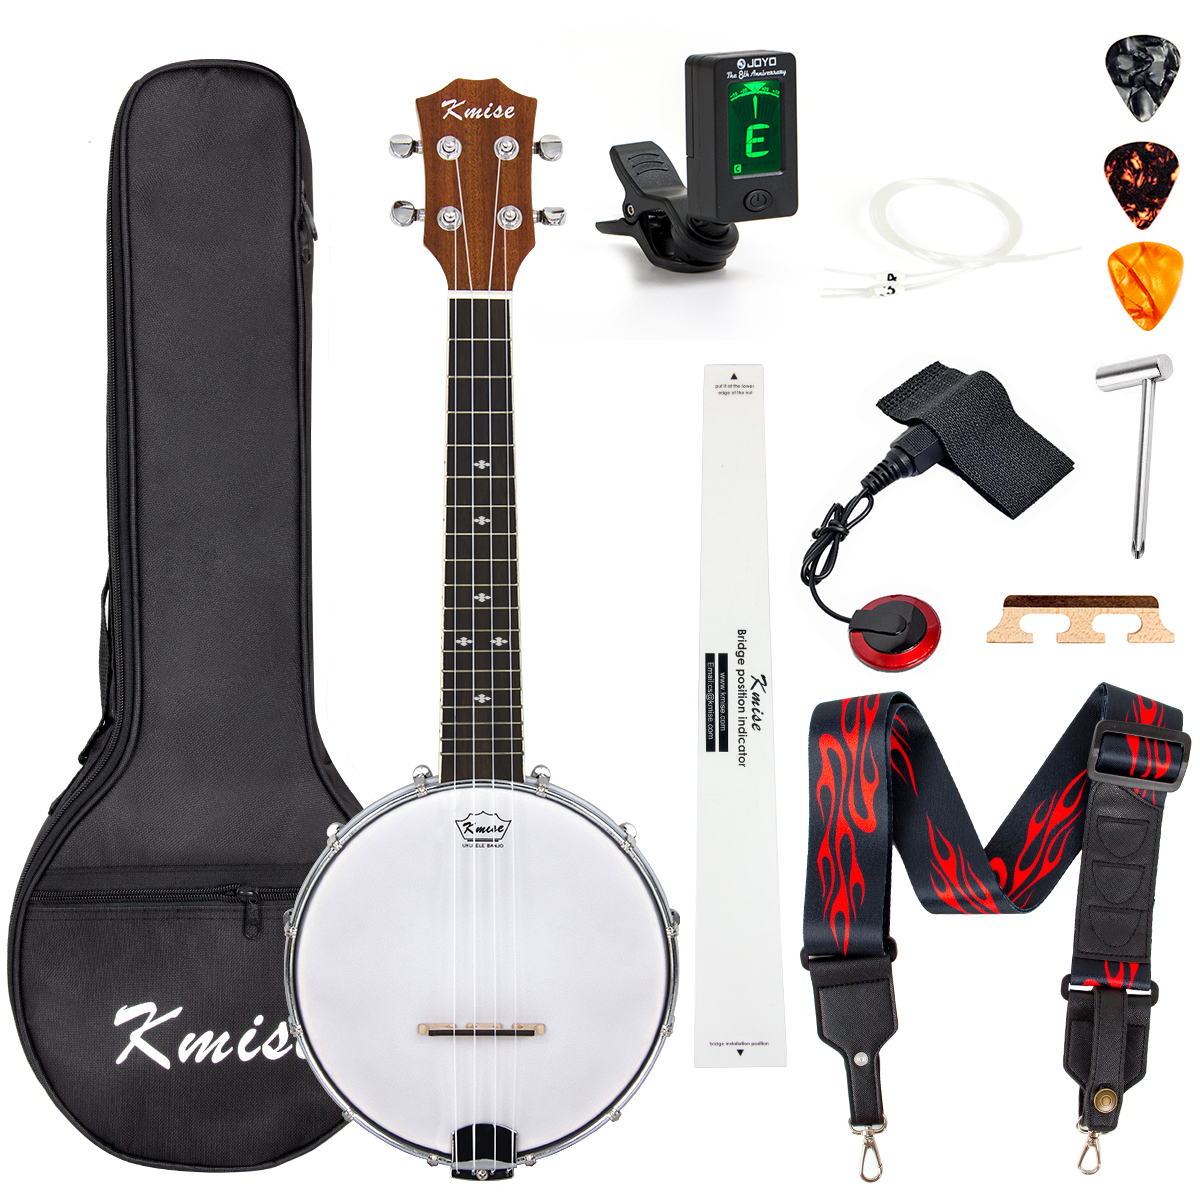 Banjo Ukulele Concert Size 23 Inch With Bag Tuner Strap Strings Pickup Picks Ruler Wrench Bridge